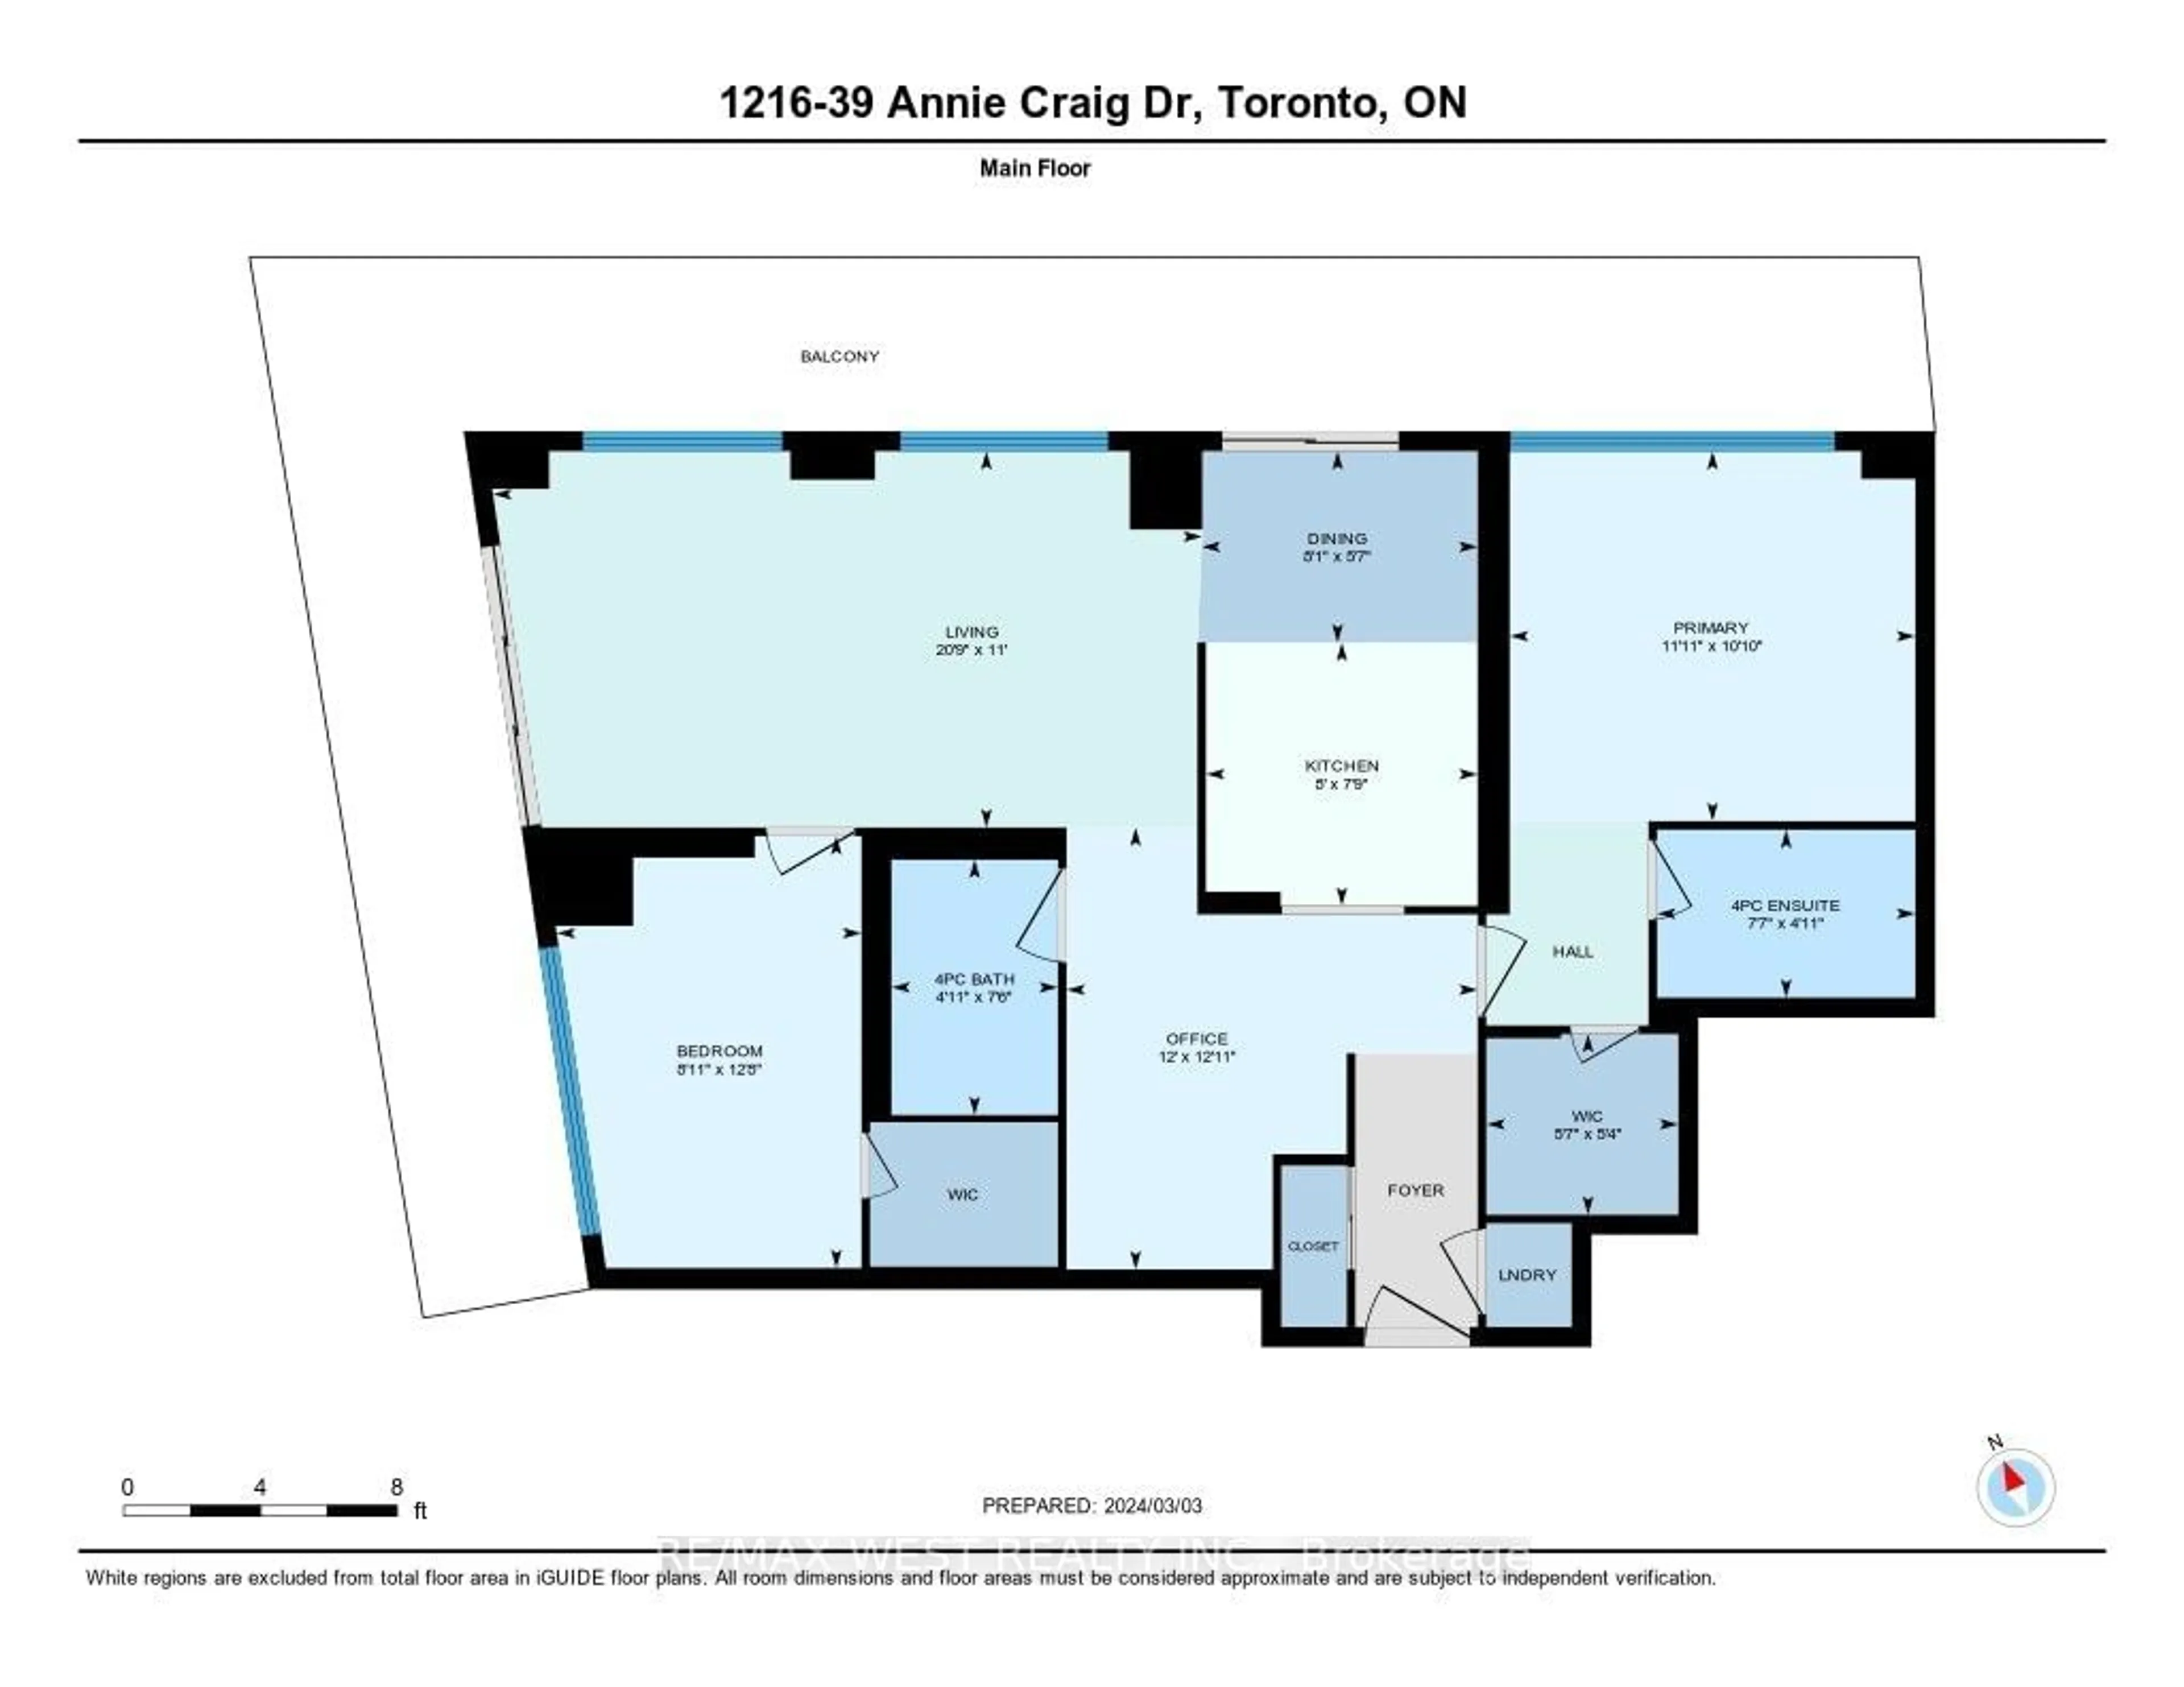 Floor plan for 39 Annie Craig Dr #1216, Toronto Ontario M8V 0C5